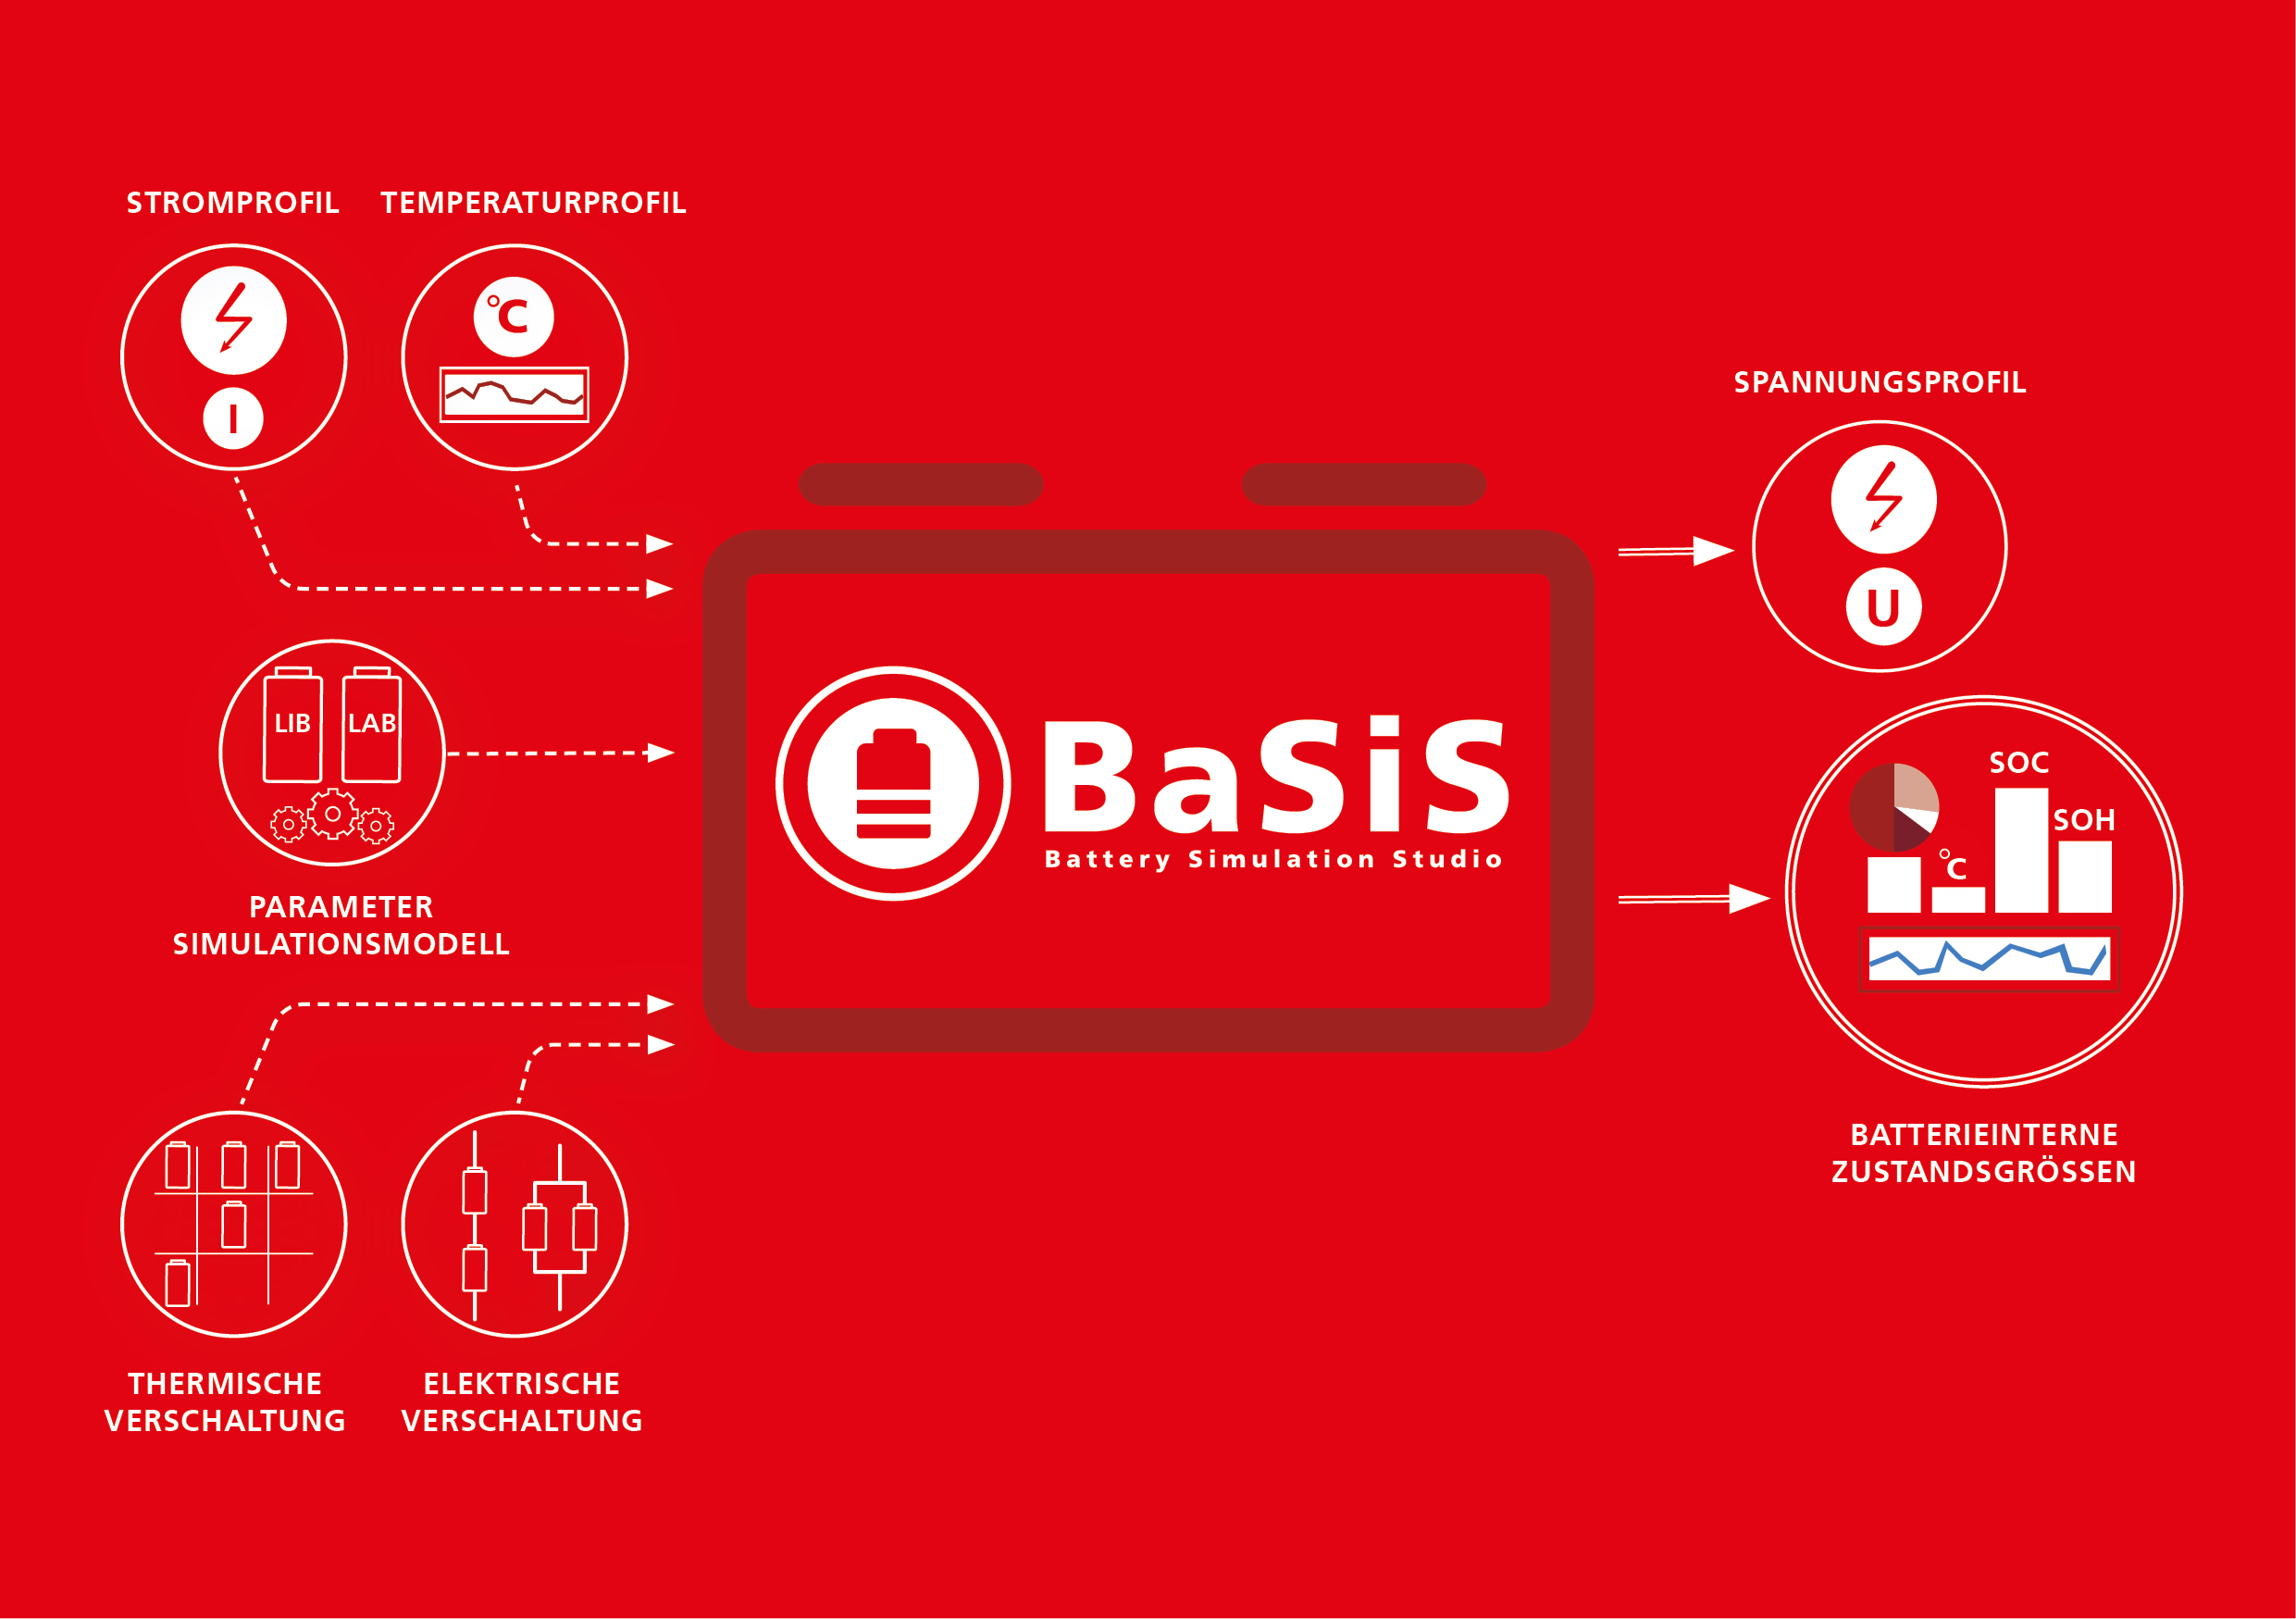 Darstellung des Systems BaSiS-Battery Simlation Studio